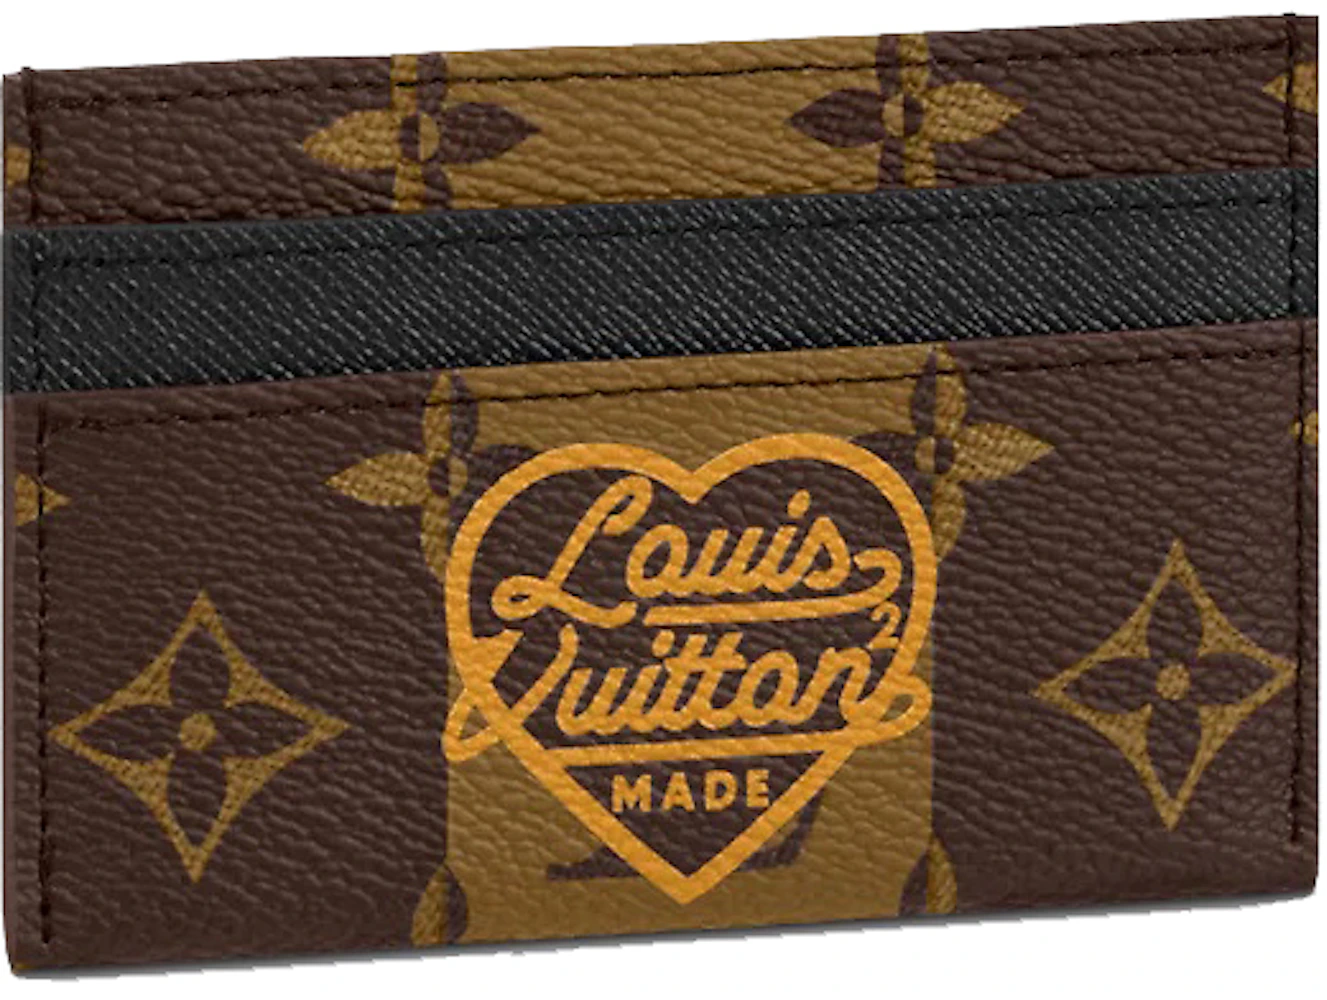 Louis Vuitton Nigo Double Card Holder Limited Edition Stripes